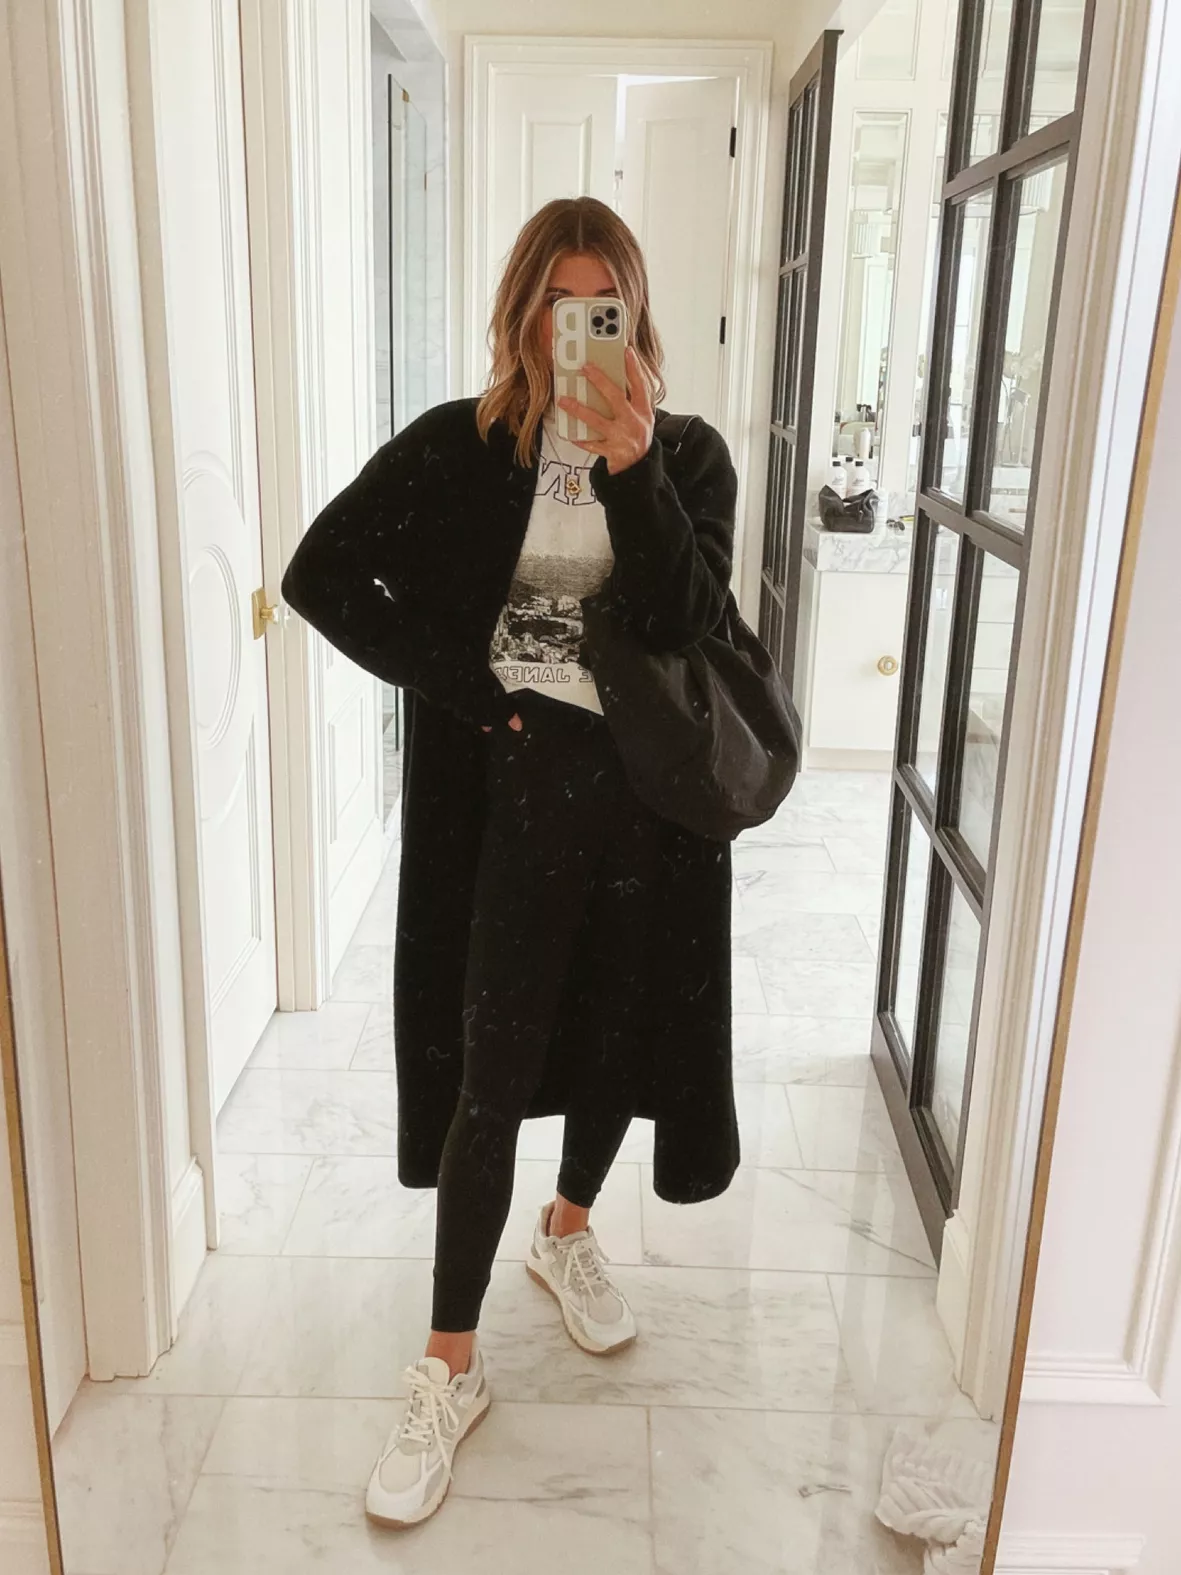 Anine Bing - Anine Bing Tiger Sweatshirt - Stone on Designer Wardrobe